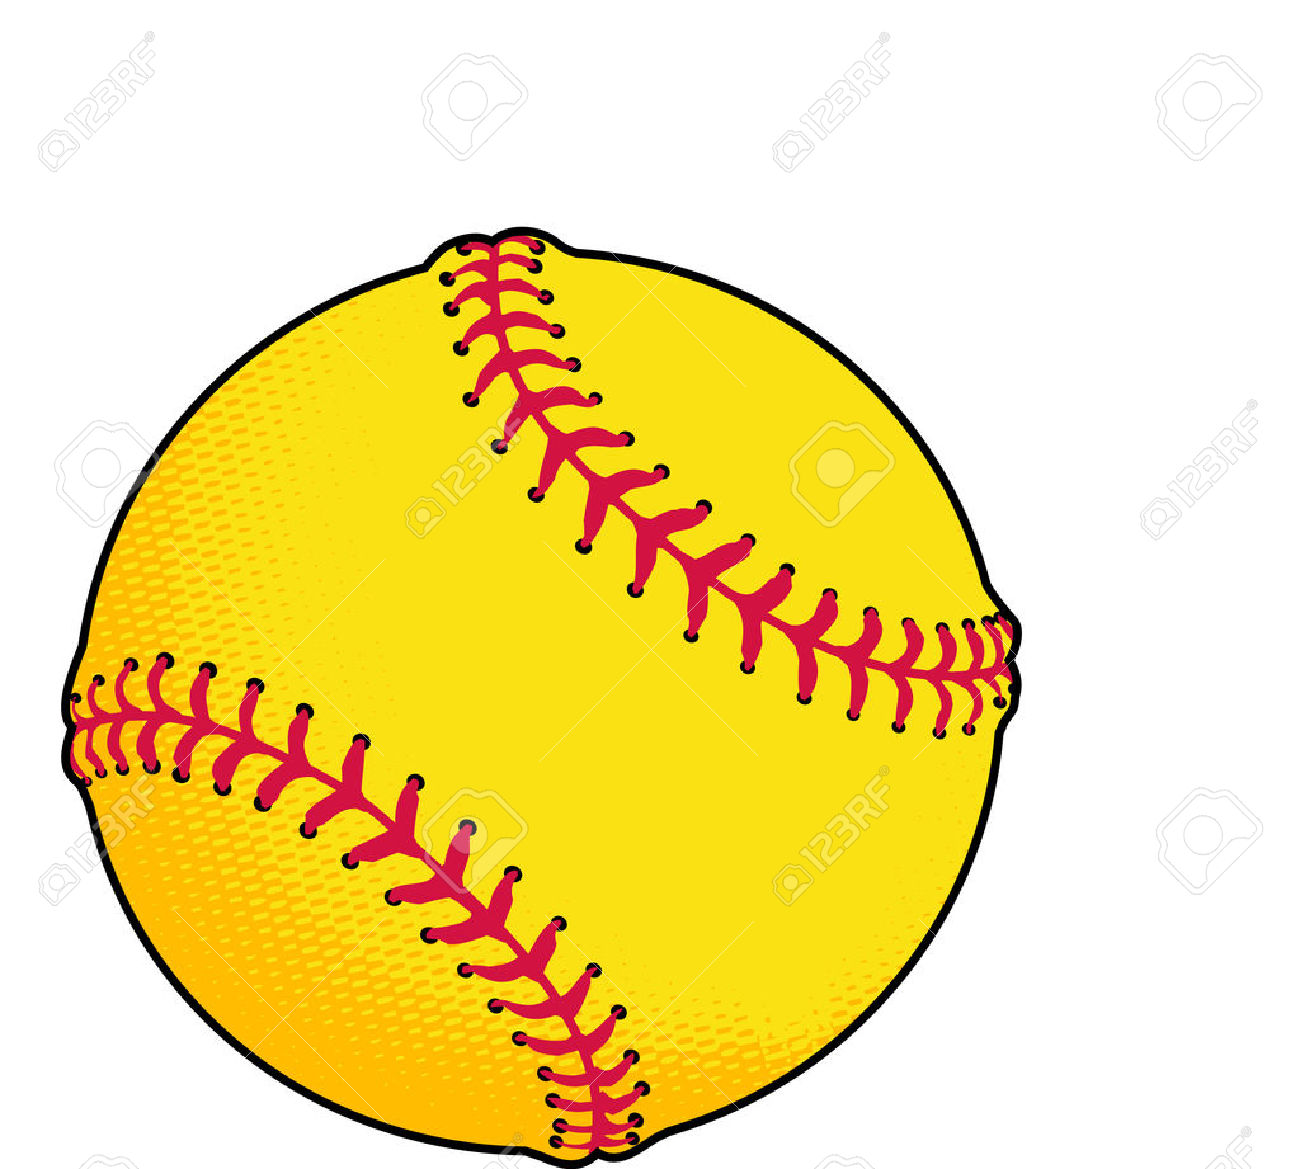 balls clipart softball